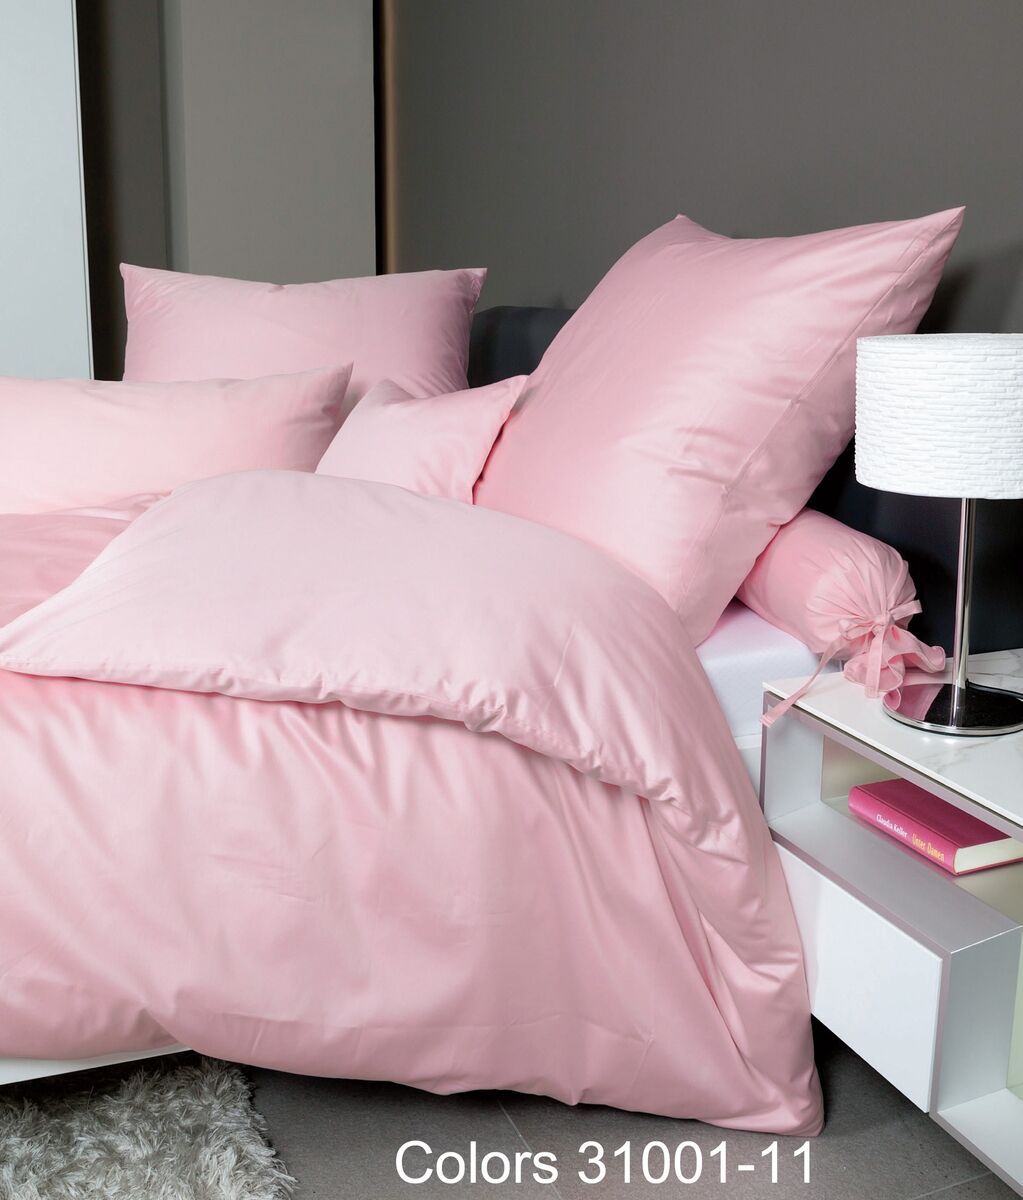 Mako-Satin Bettwäsche Colors 31001 rosa kaufen | Offizieller Janine-Shop